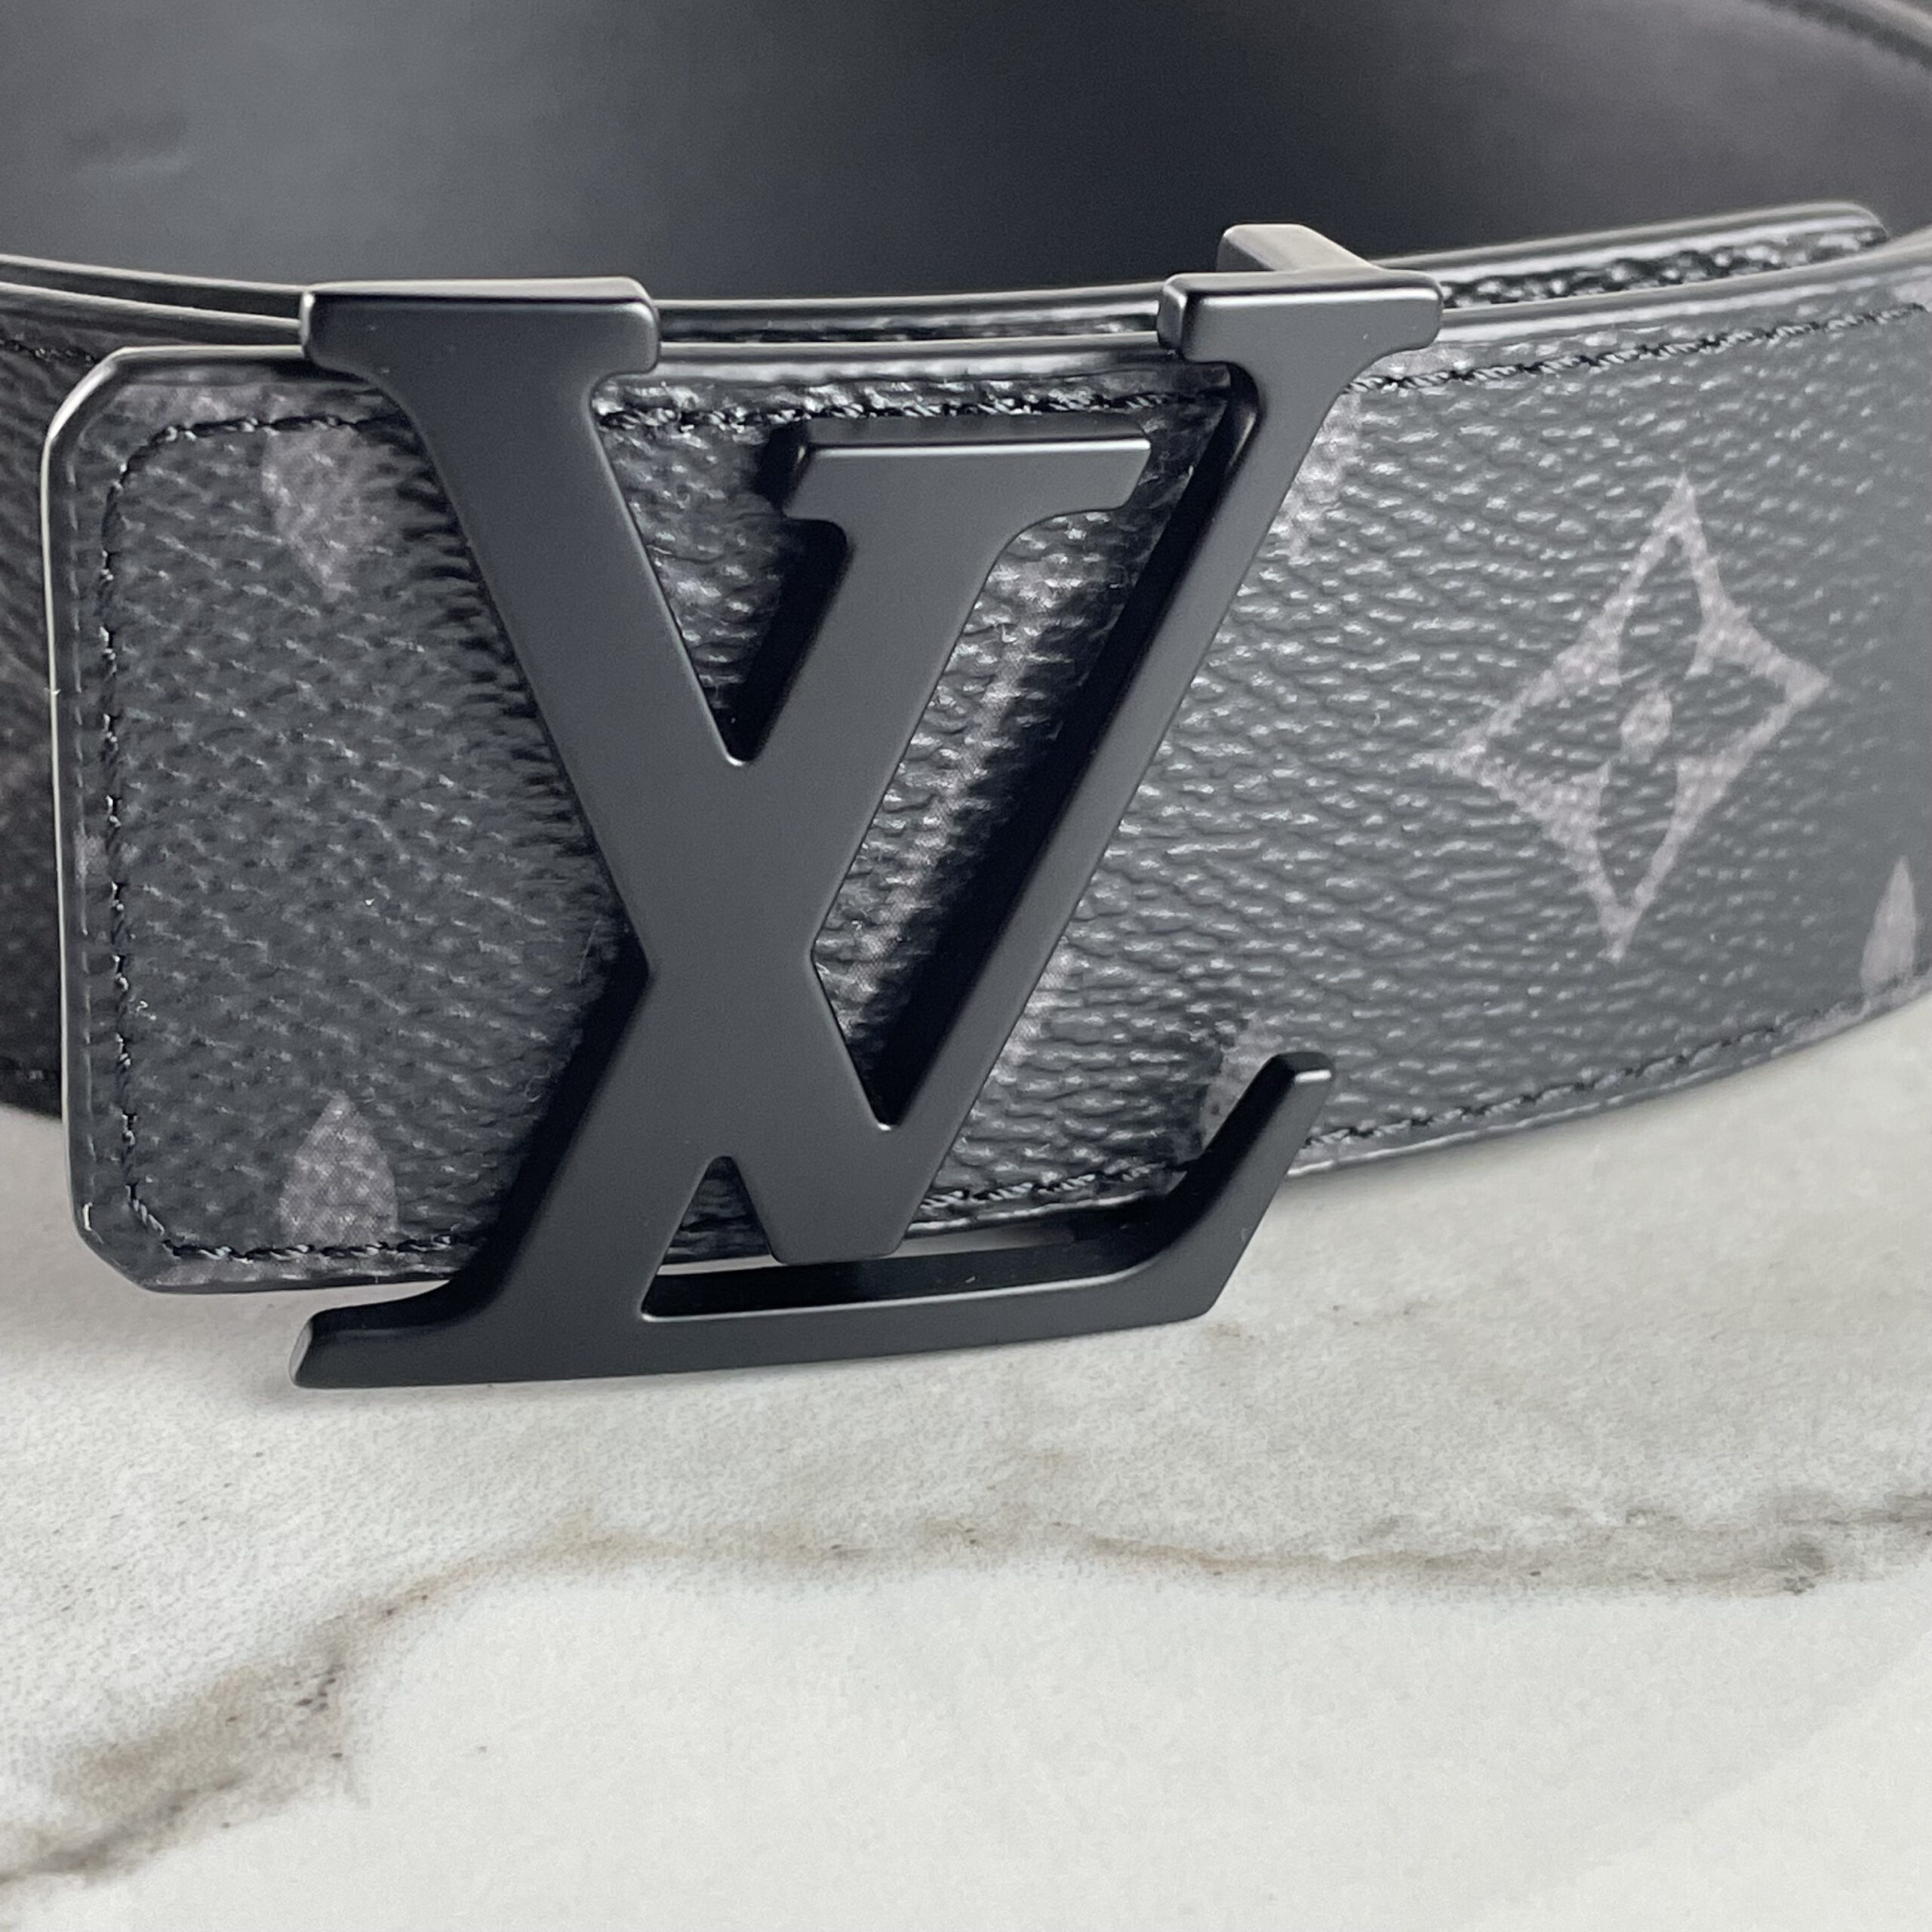 Louis Vuitton LV Initials 40MM Matte Black Belt - Vitkac shop online